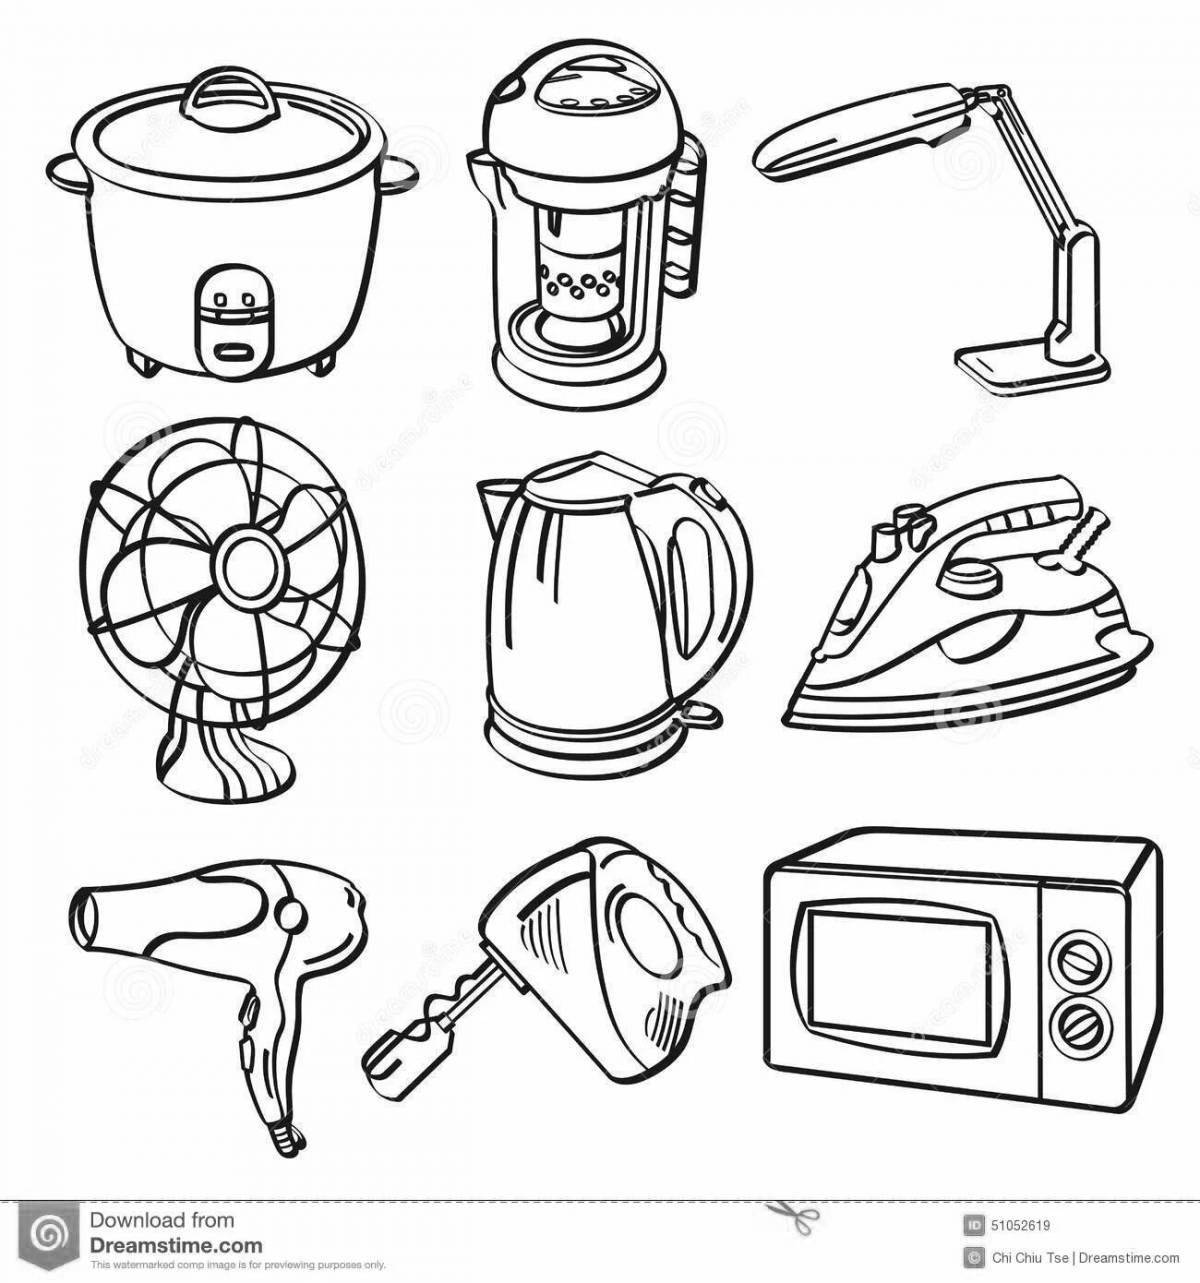 Children's electrical appliances #20